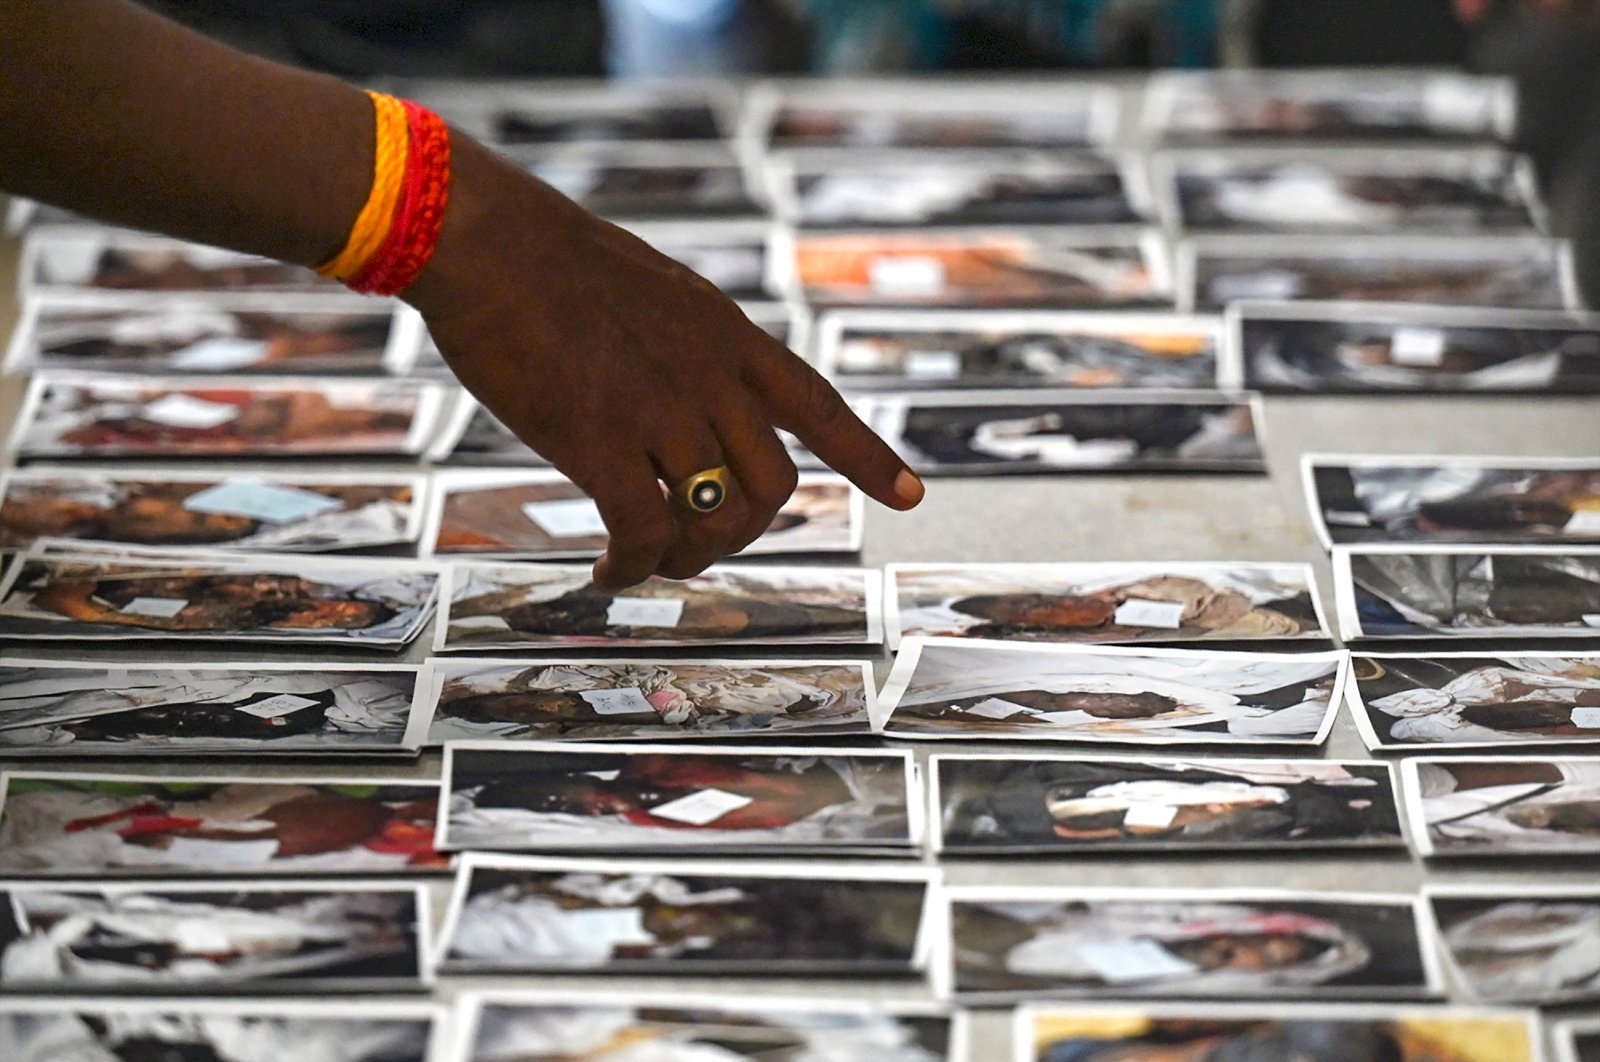 Lebih dari 100 mayat masih belum diklaim beberapa hari setelah bencana kereta api India